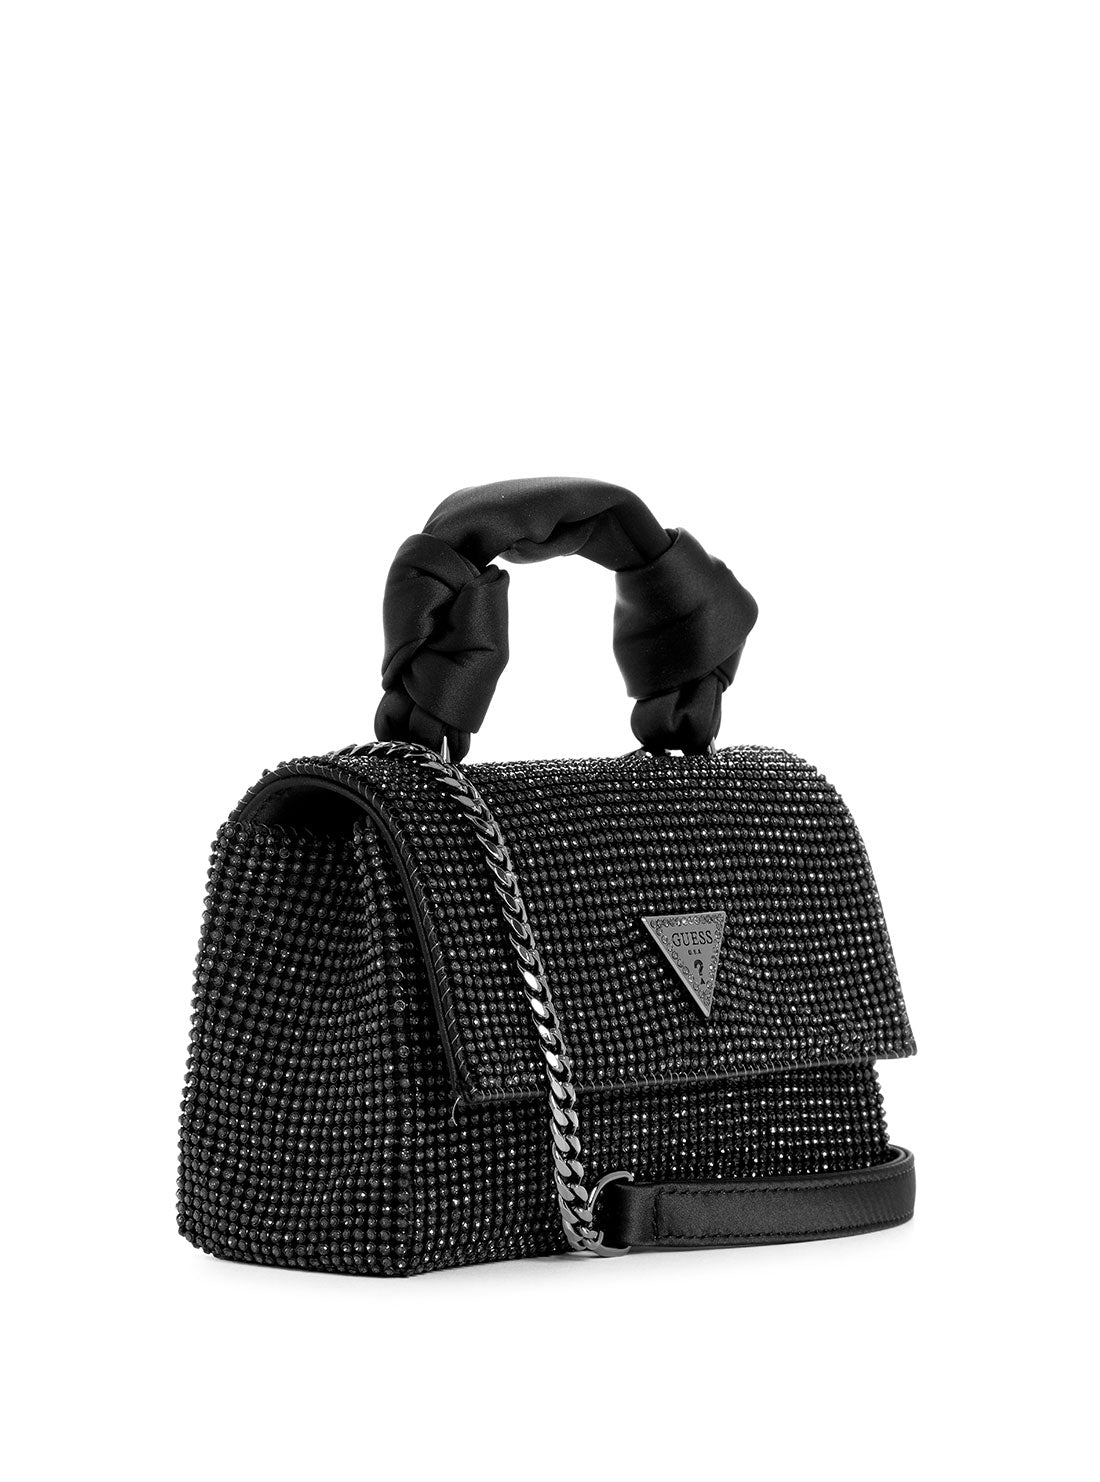 GUESS Black Lua Top Handle Flap Bag side view